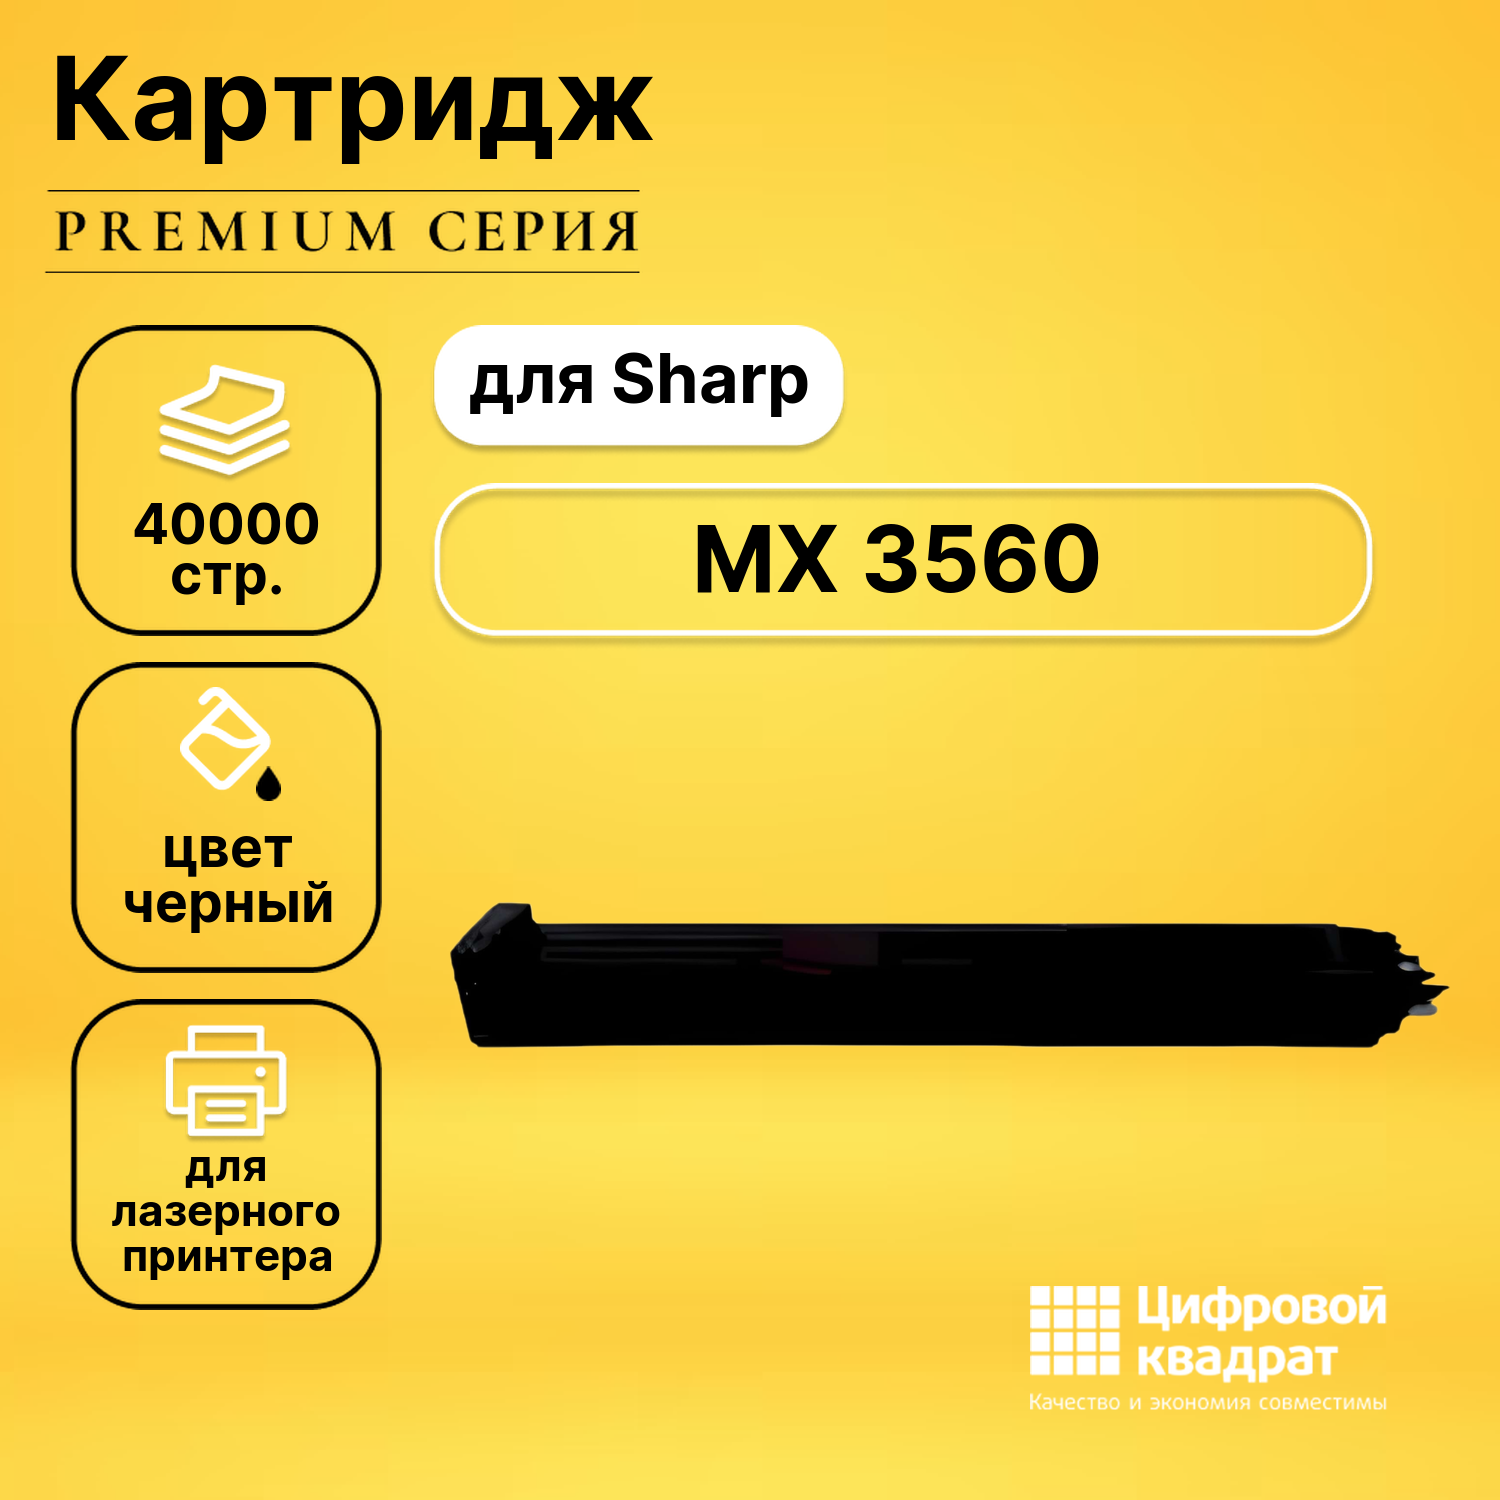 Картридж DS для Sharp MX 3560 совместимый